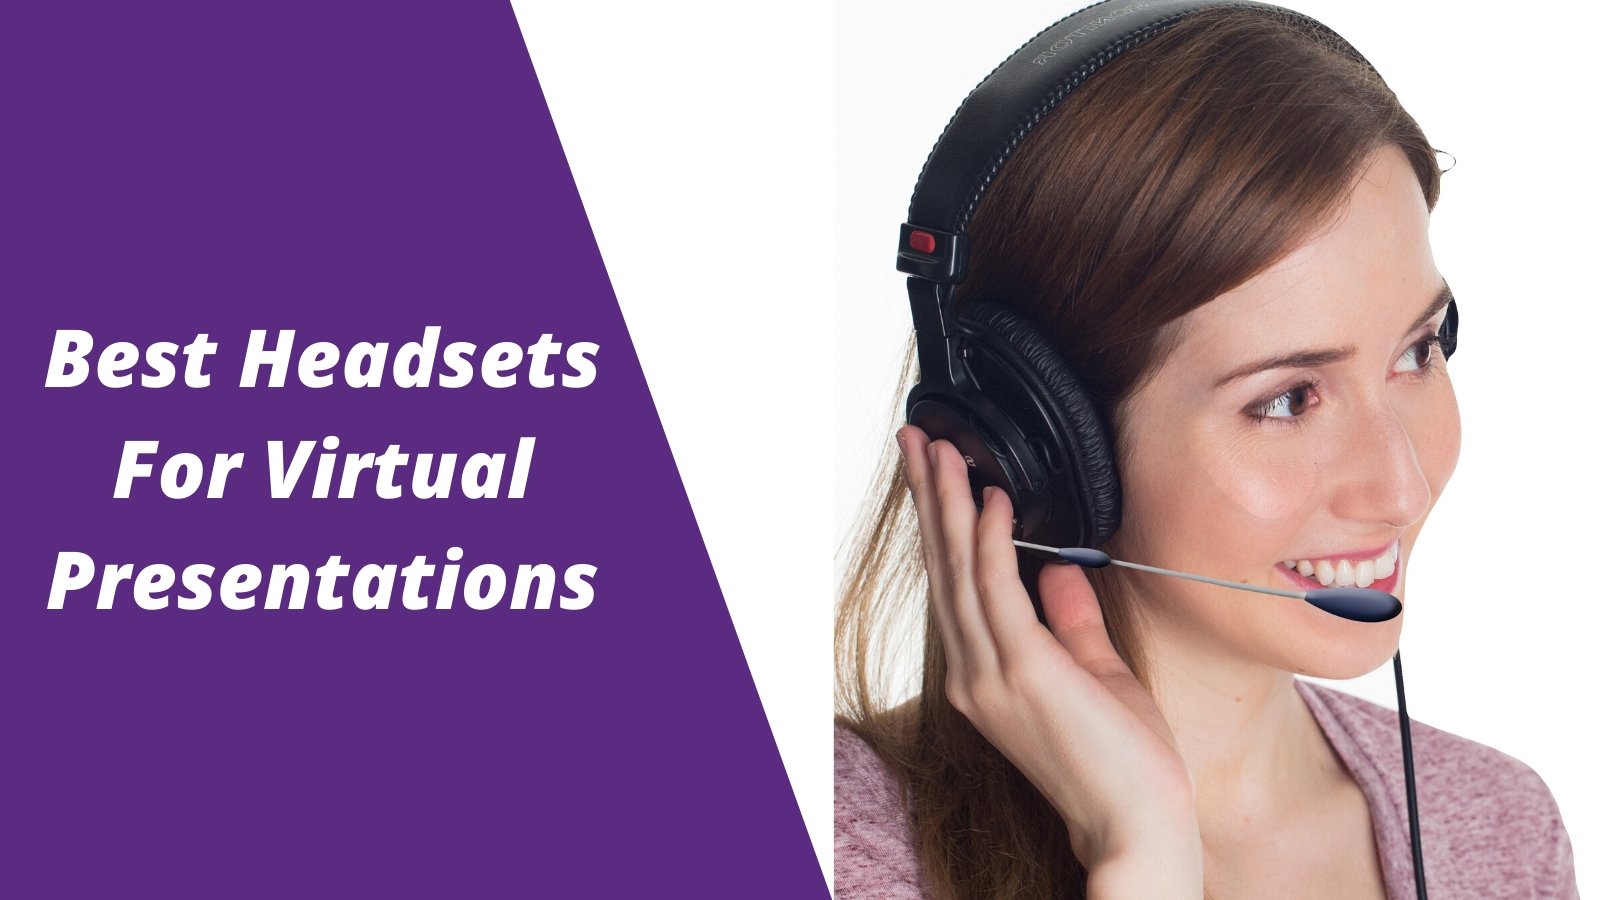 The Best Headsets For Better Virtual Presentations - Headset Advisor